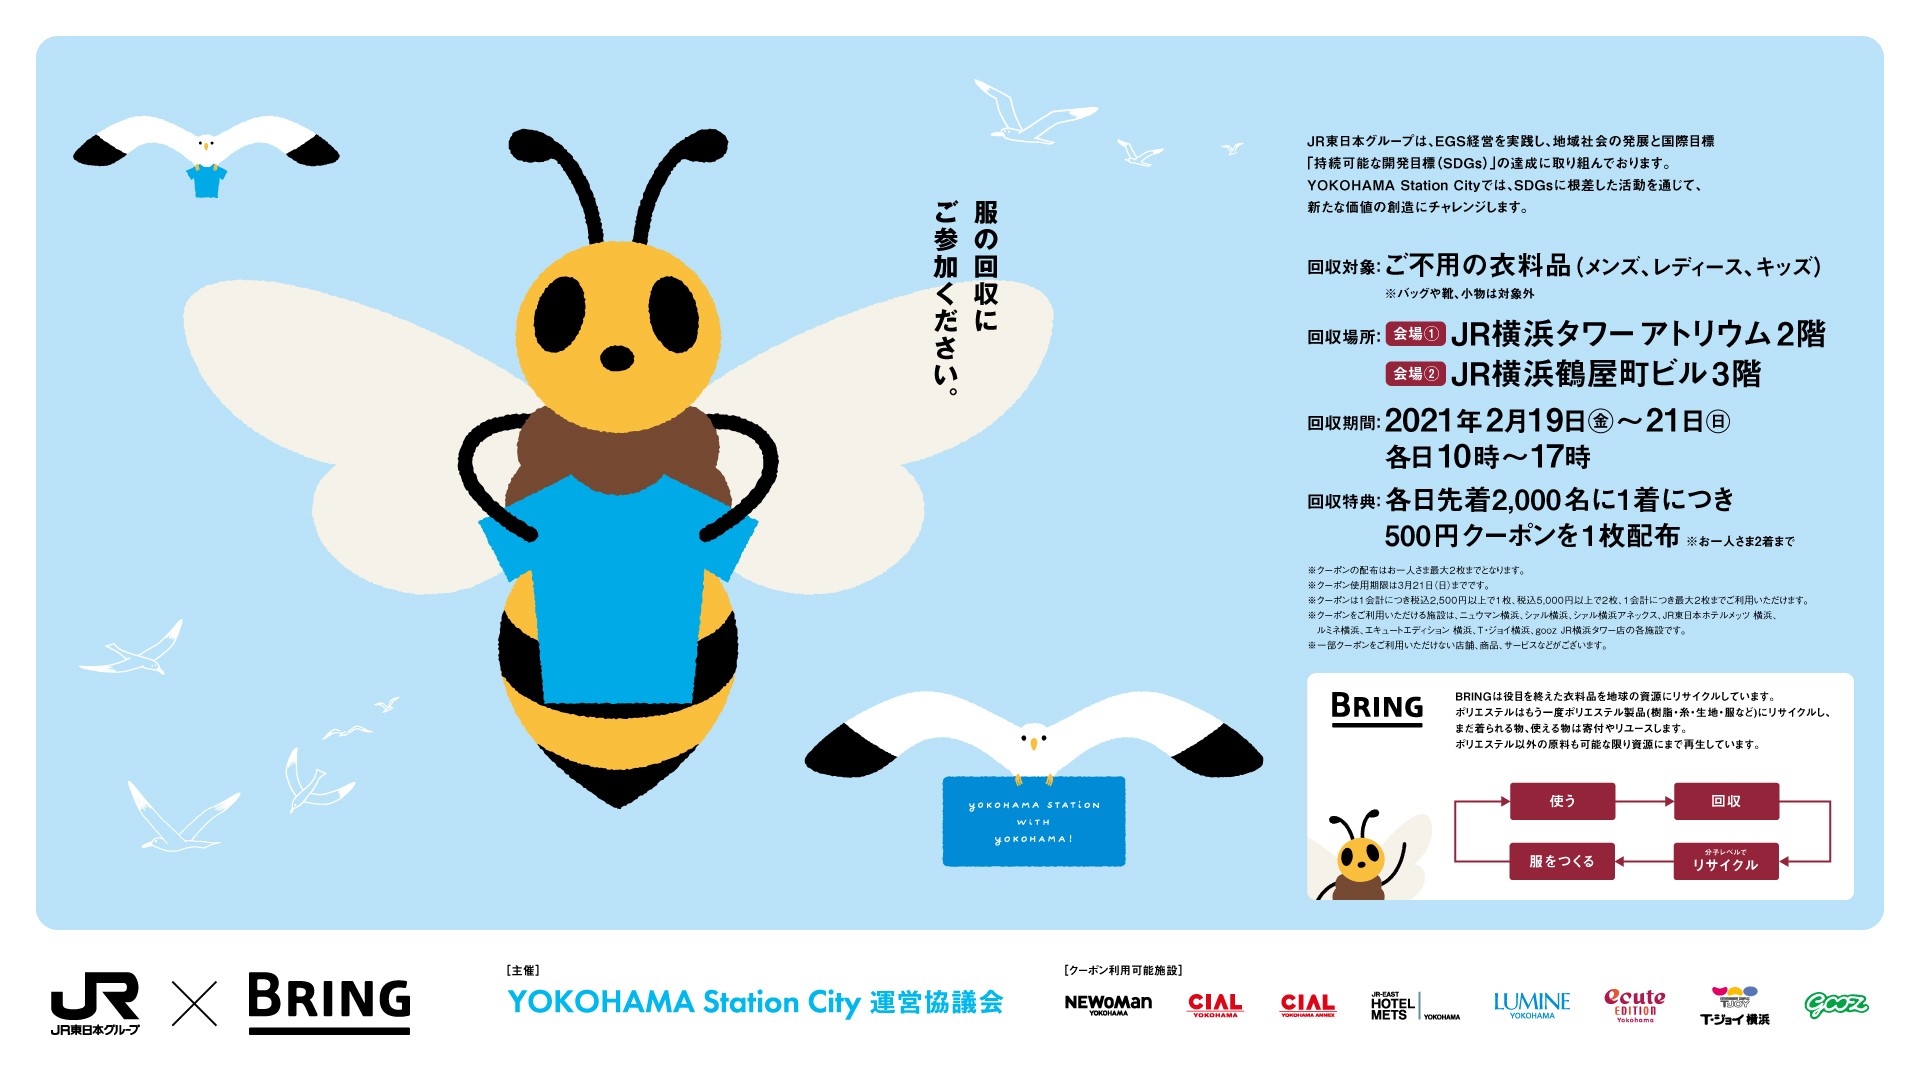 YOKOHAMA Station City「不用衣類の回収キャンペーン 第2弾」